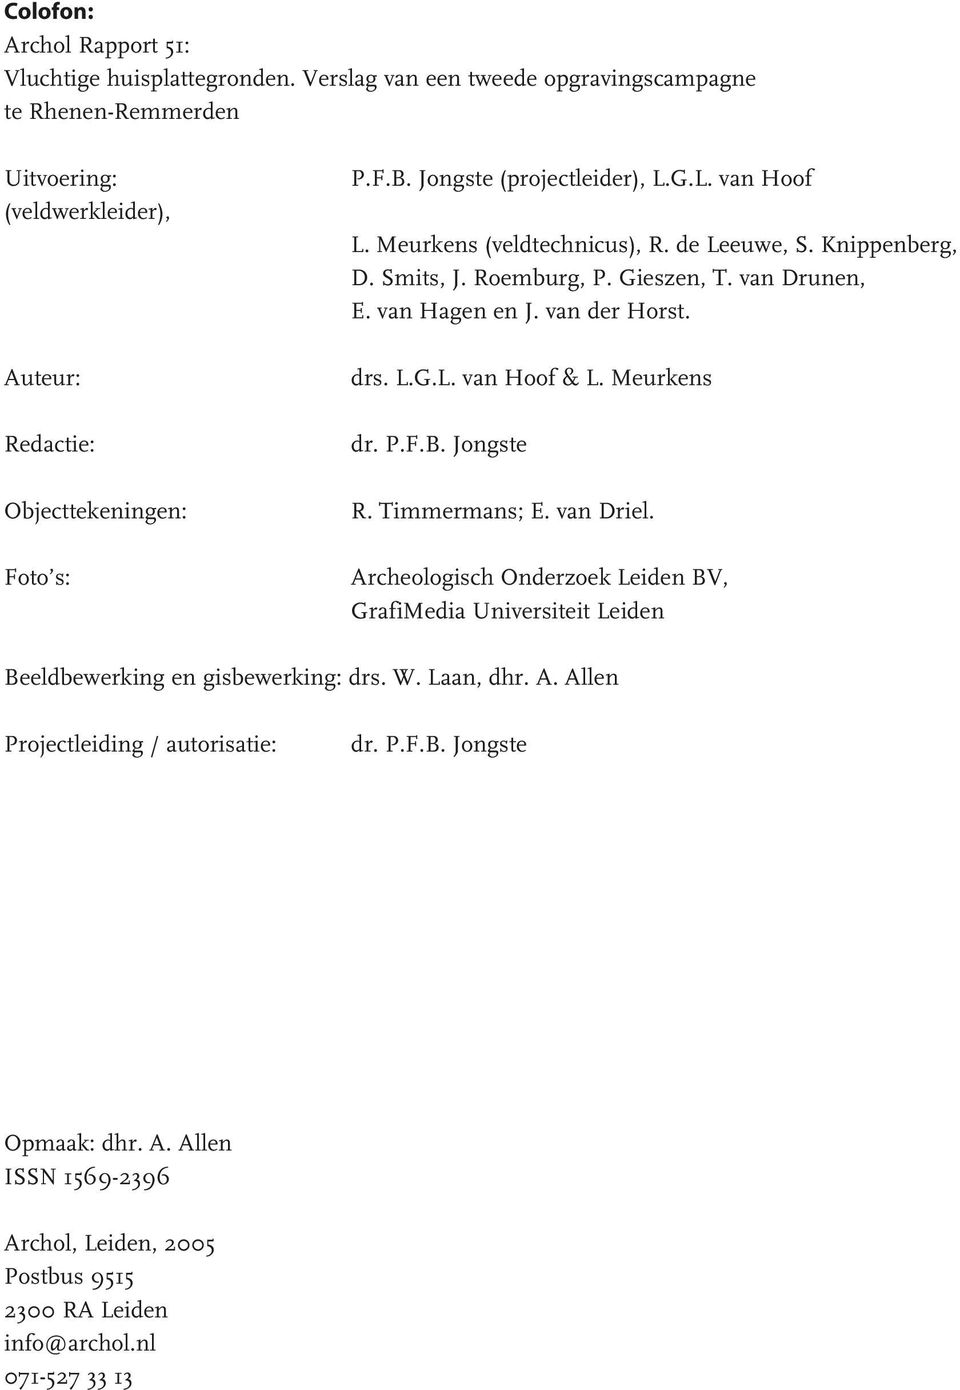 Meurkens (veldtechnicus), R. de Leeuwe, S. Knippenberg, D. Smits, J. Roemburg, P. Gieszen, T. van Drunen, E. van Hagen en J. van der Horst. drs. L.G.L. van Hoof & L. Meurkens dr. P.F.B.